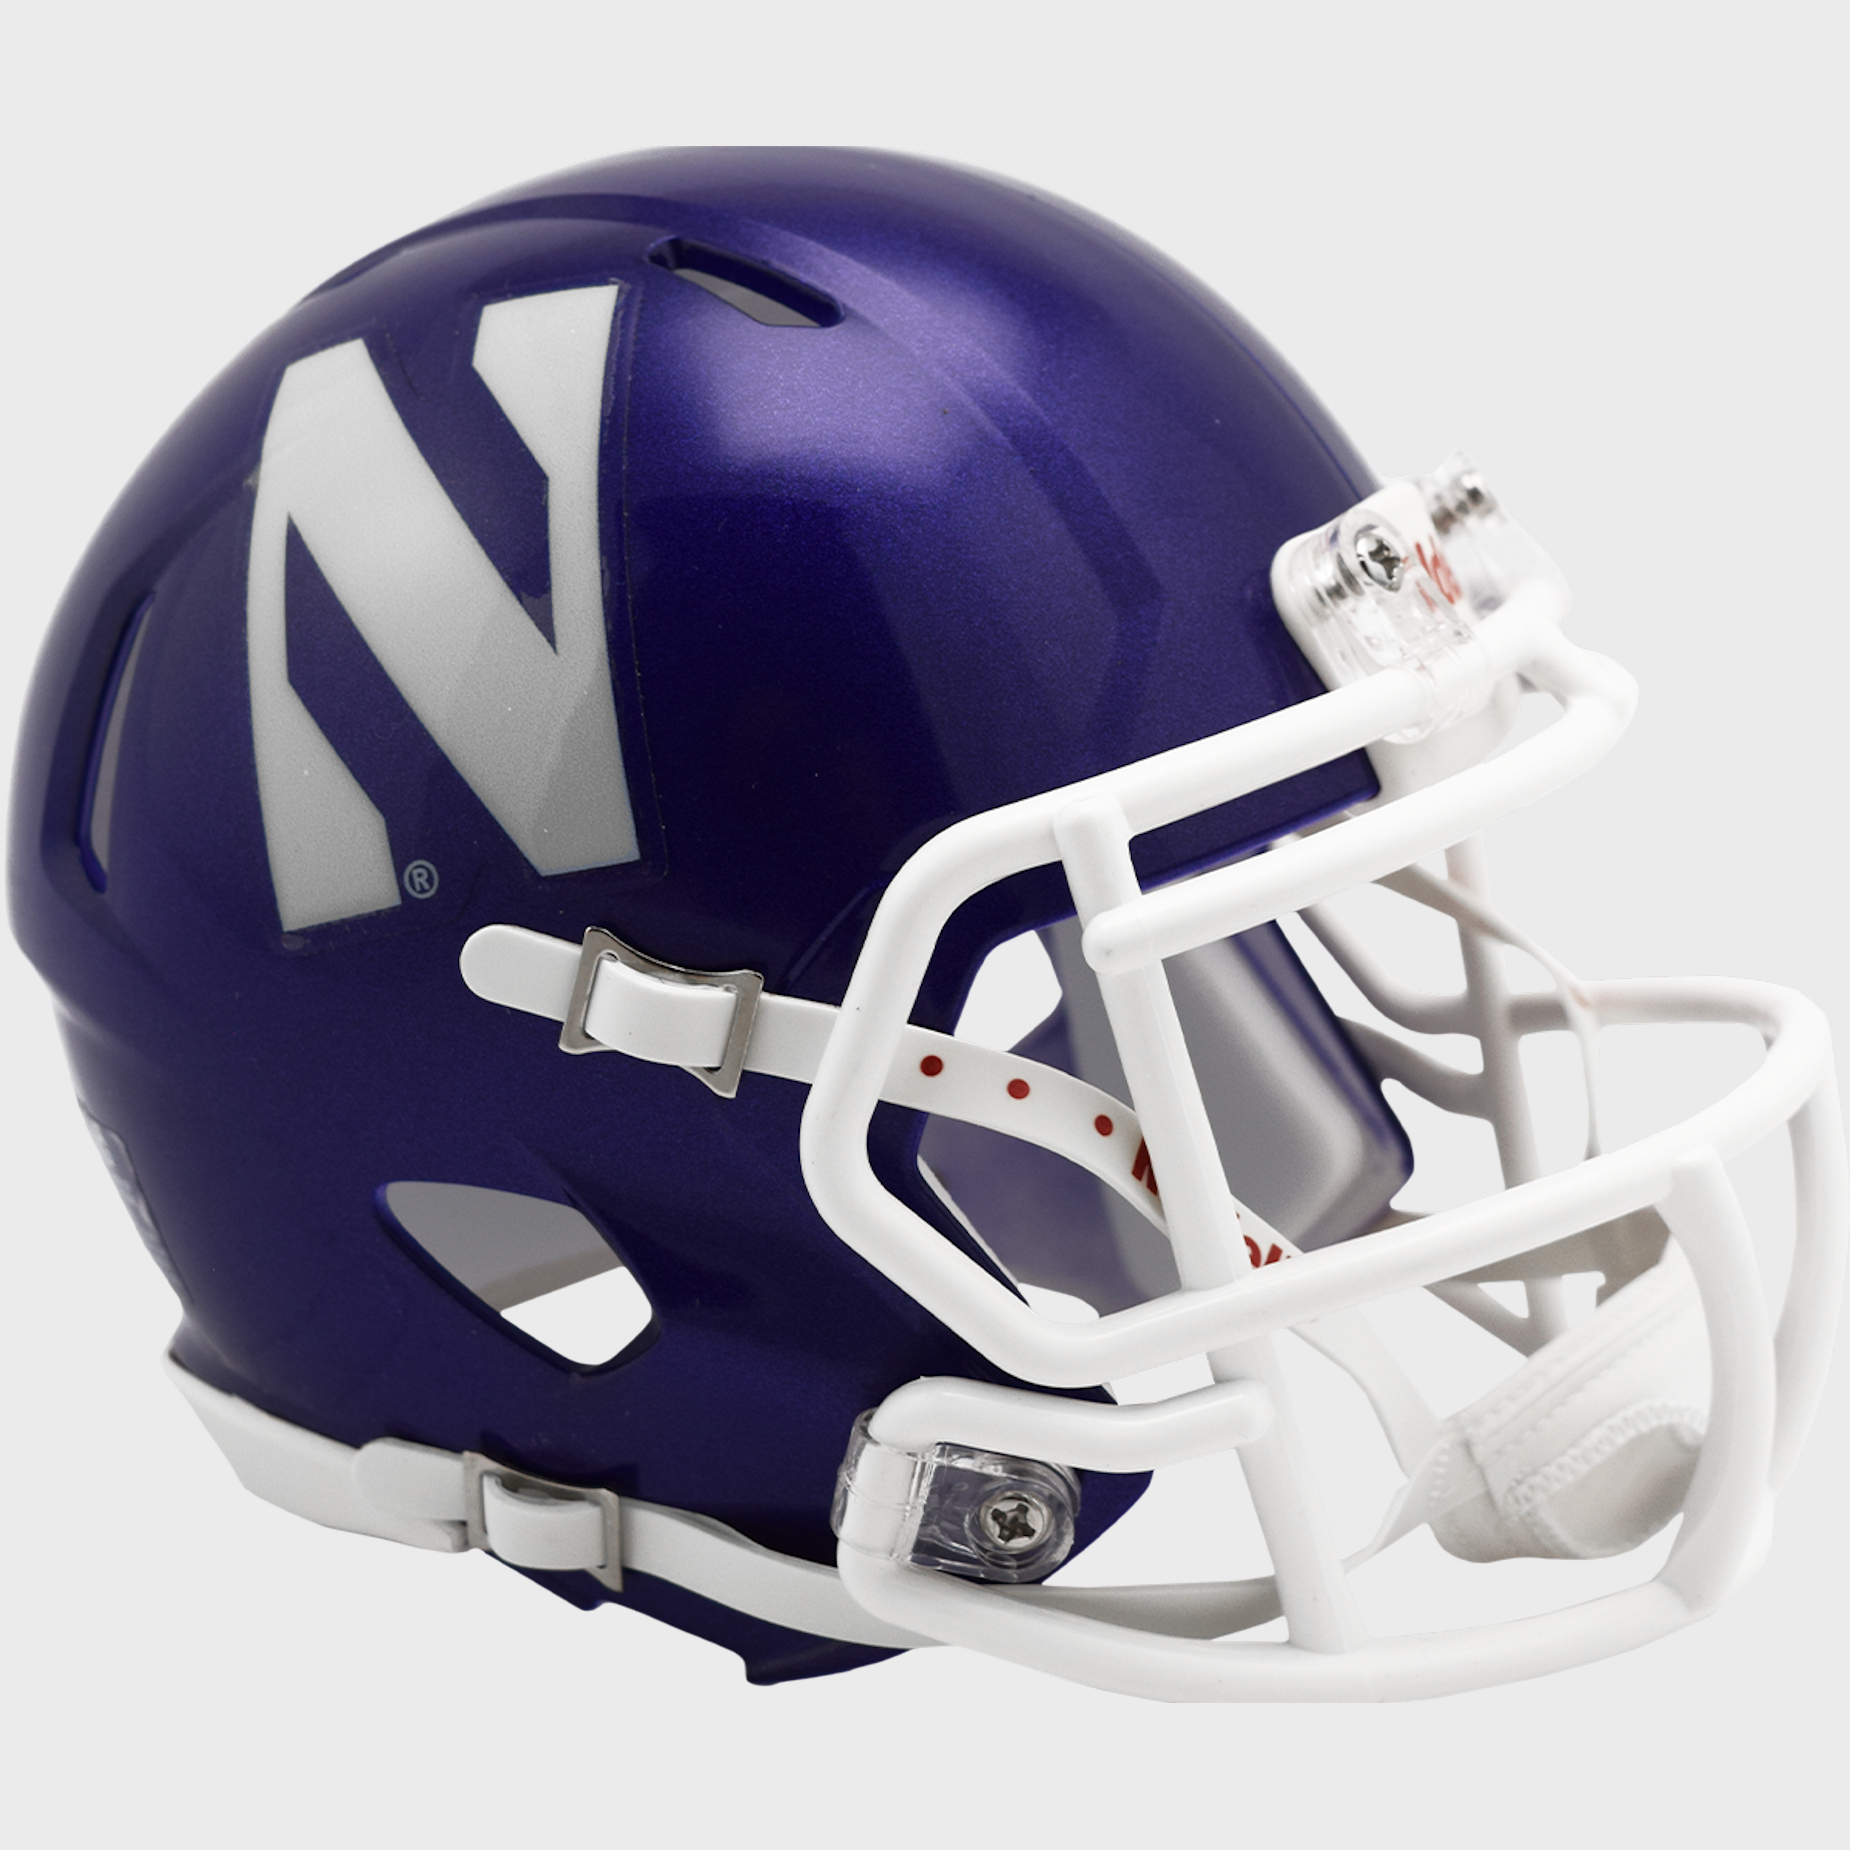 Northwestern Wildcats mini helmet